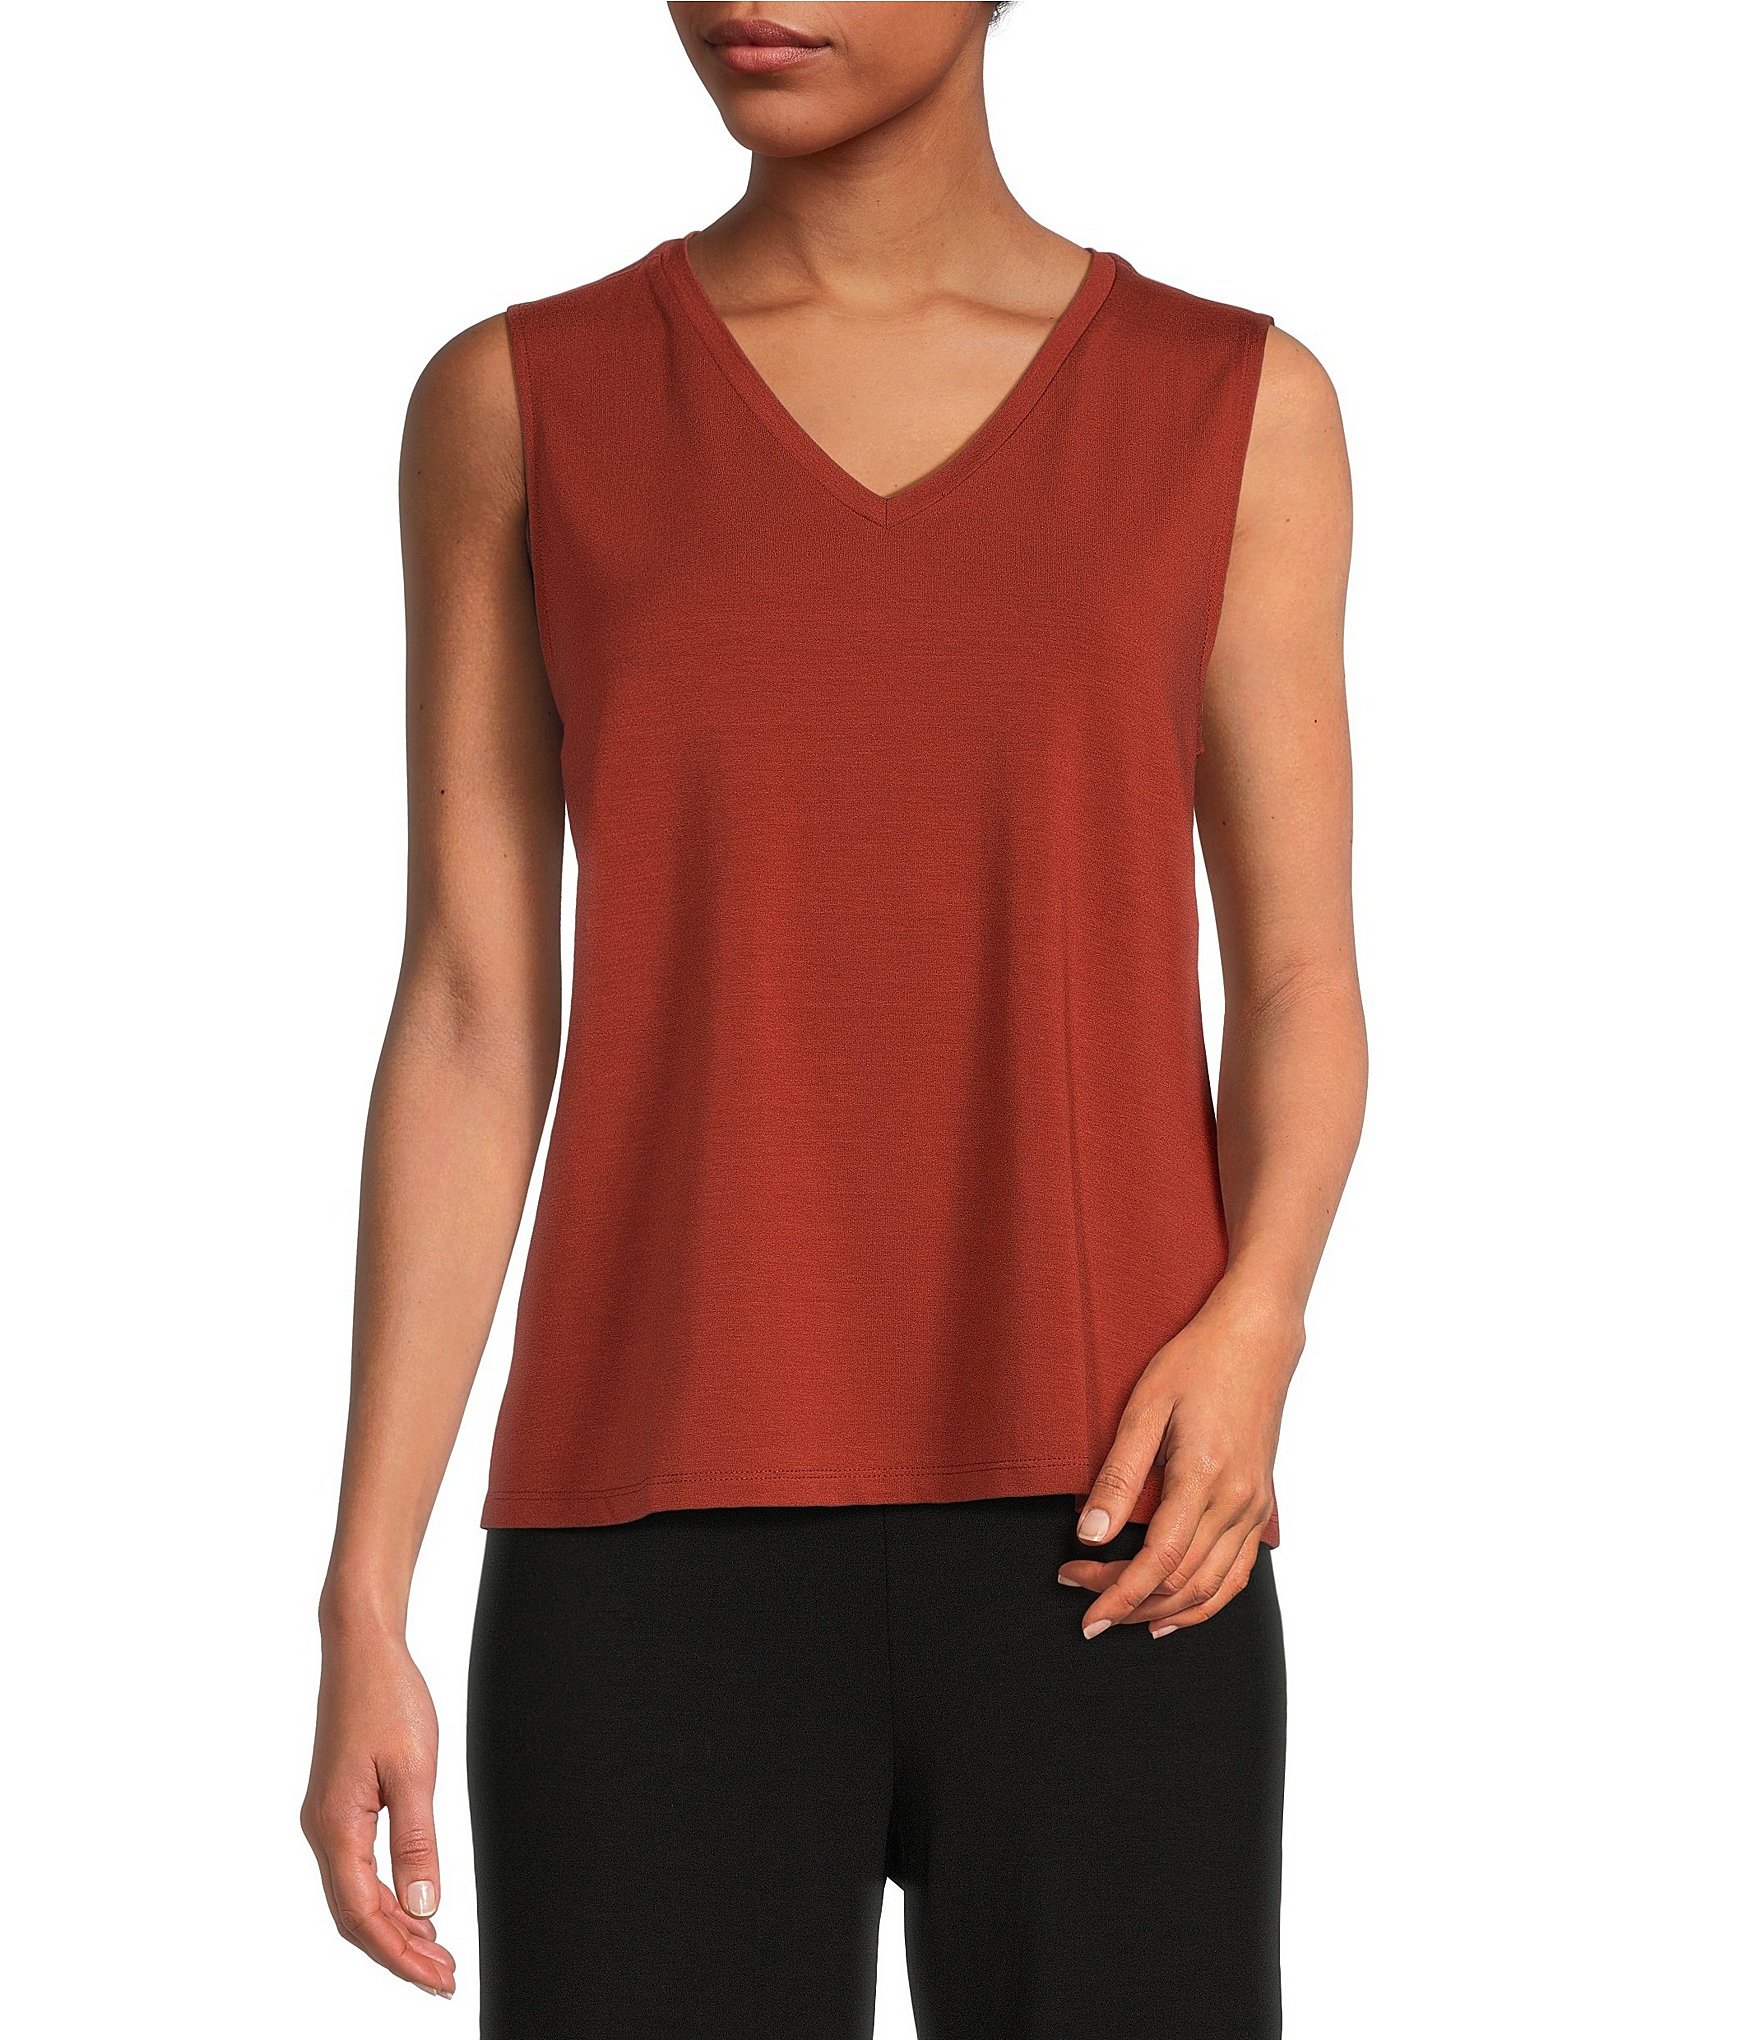 Nedrustning Objector skandale sleeveless blouse: Women's Tops & Dressy Tops | Dillard's